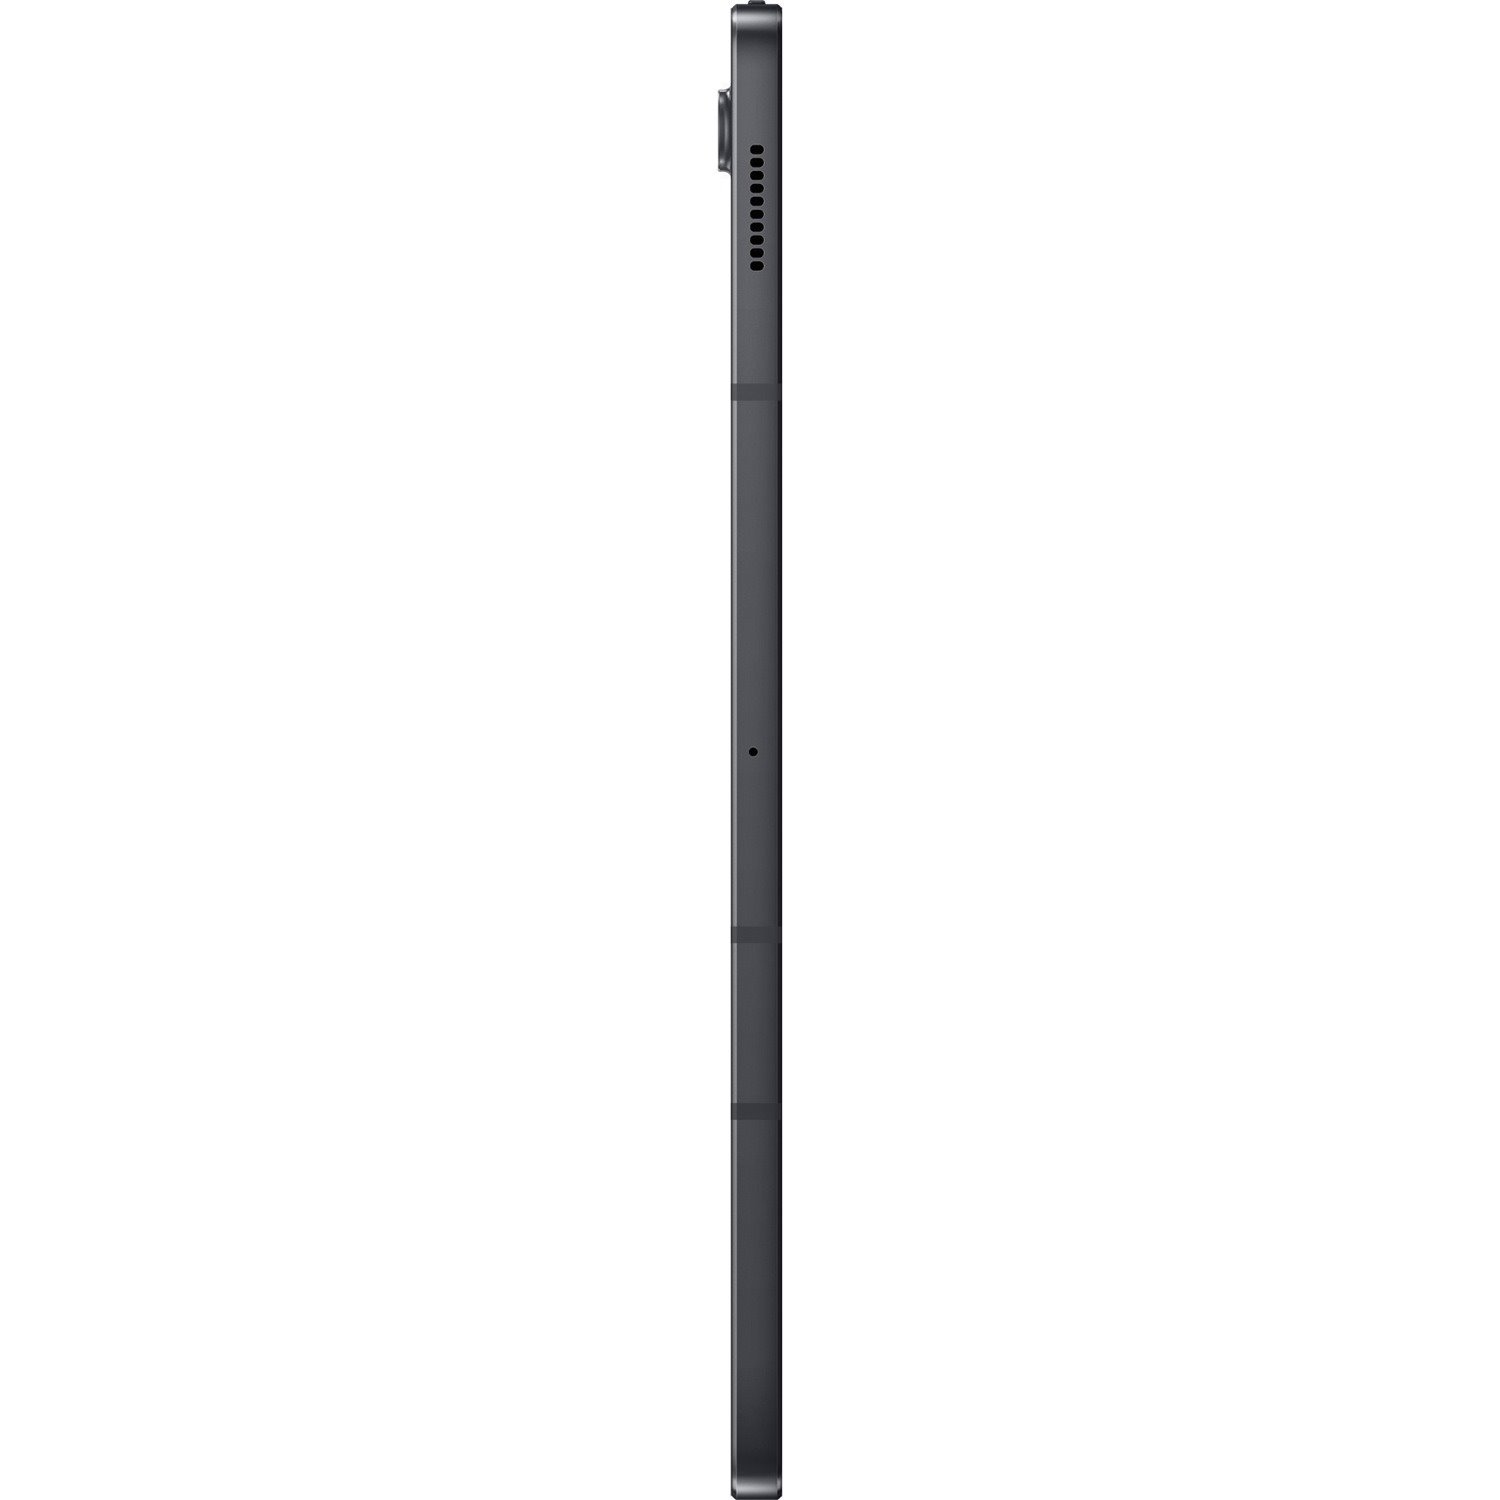 Samsung Galaxy Tab S7 FE 5G SM-T736B Tablet - 12.4" WQXGA - Qualcomm SM7225 Snapdragon 750G 5G Octa-core - 6 GB - 128 GB Storage - 5G - Mystic Black